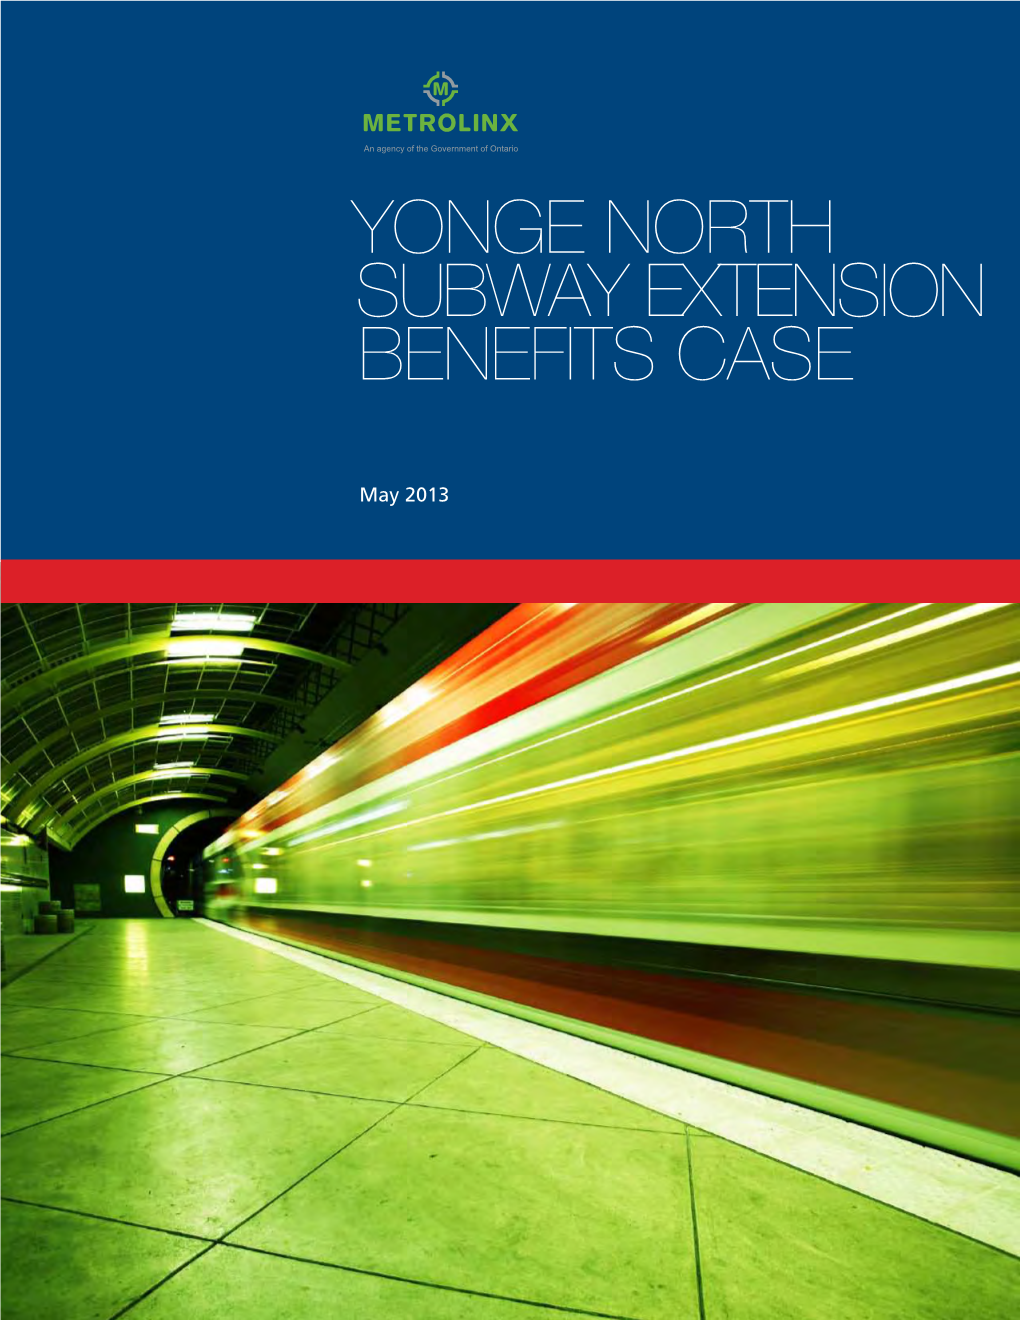 Yonge North Subway Extension Benefits Case